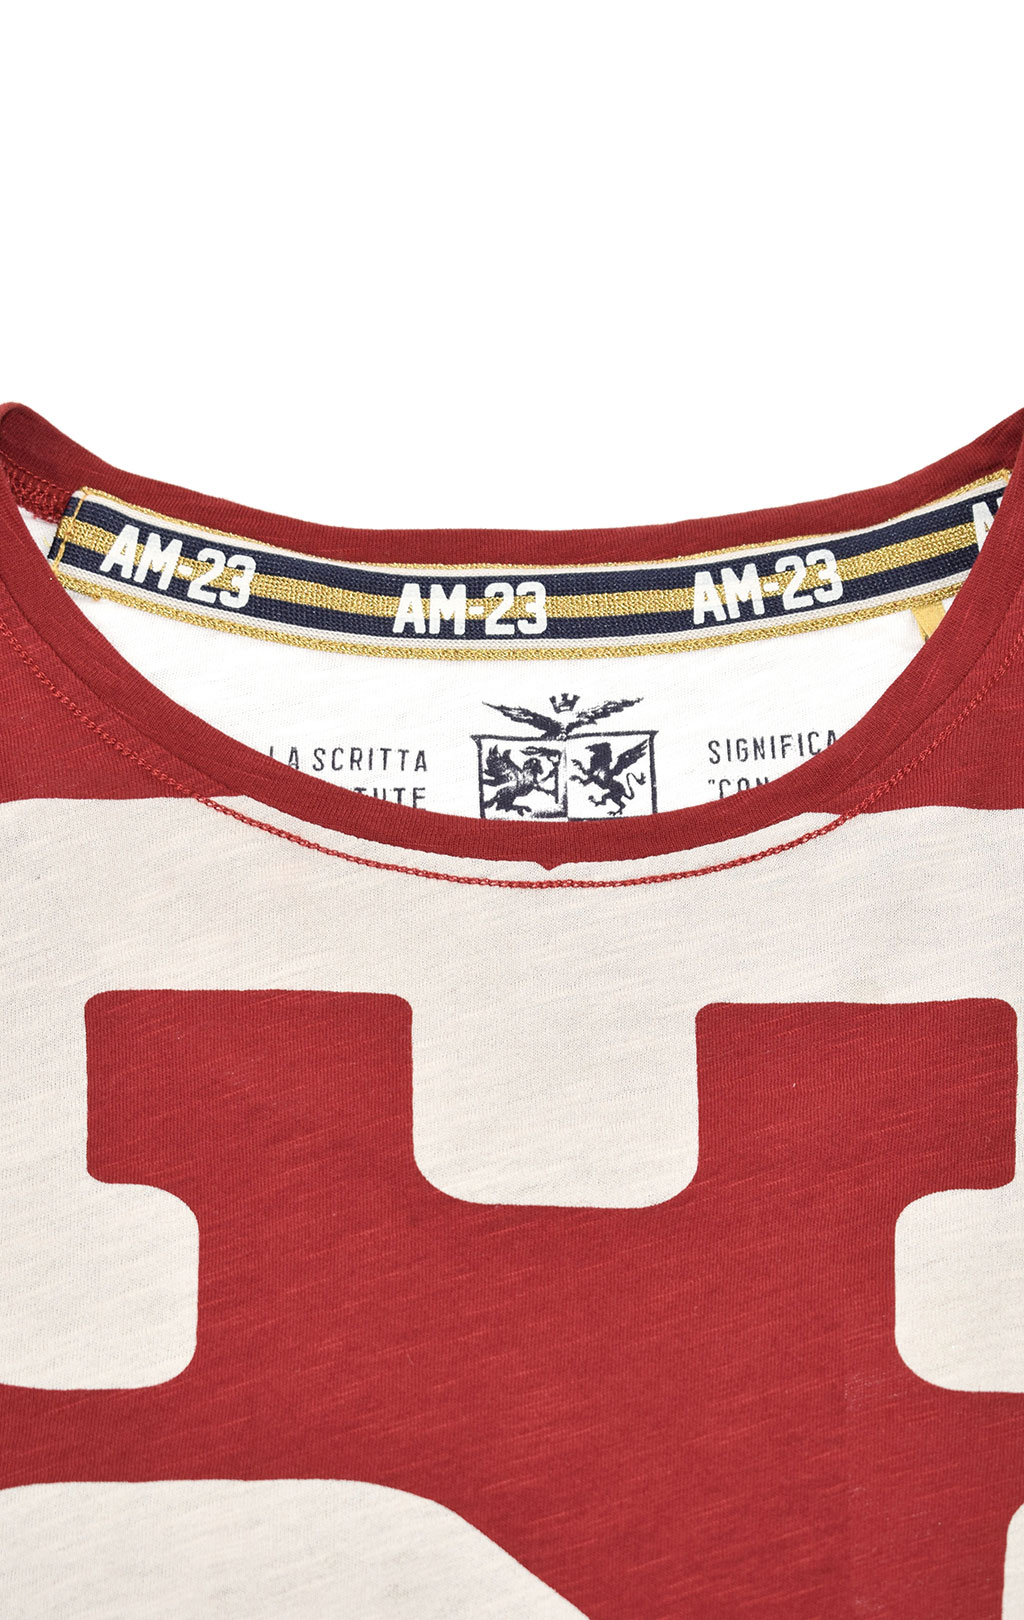 Женская футболка AERONAUTICA MILITARE SS 20/PT rosso (TS 1742) 